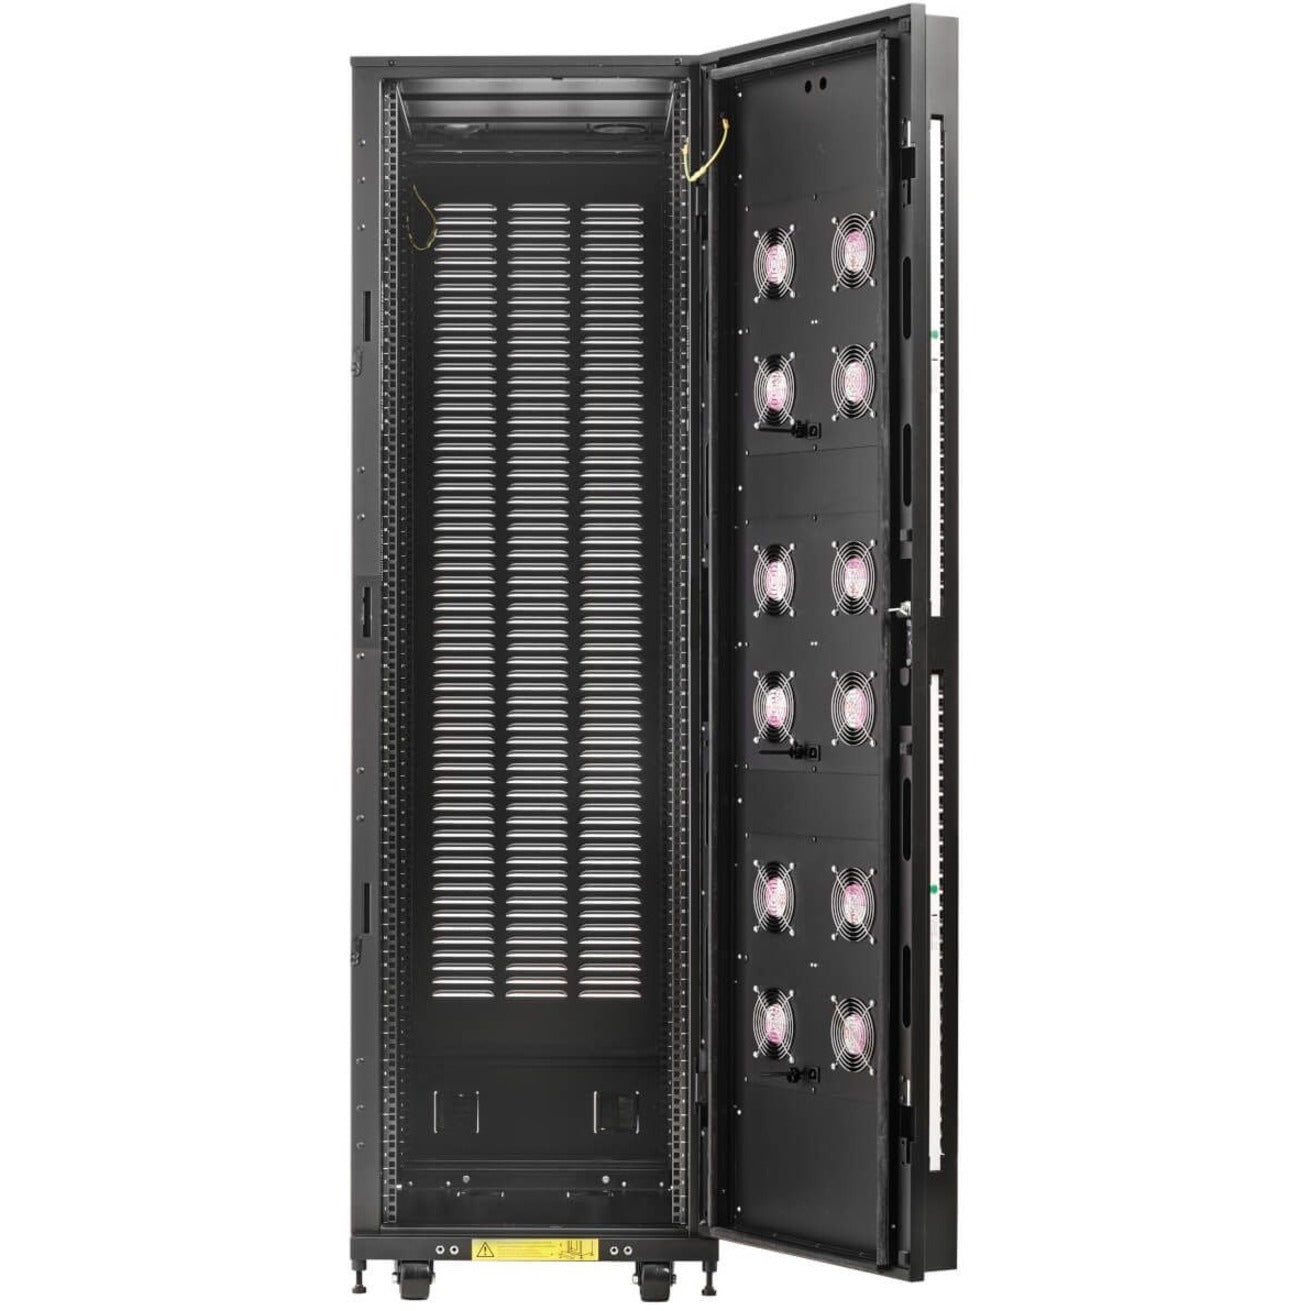 Tripp Lite SR42UBEIS SmartRack Enclosure Rack Cabinet, NEMA 12 (IP54) Protection Rating, 42U